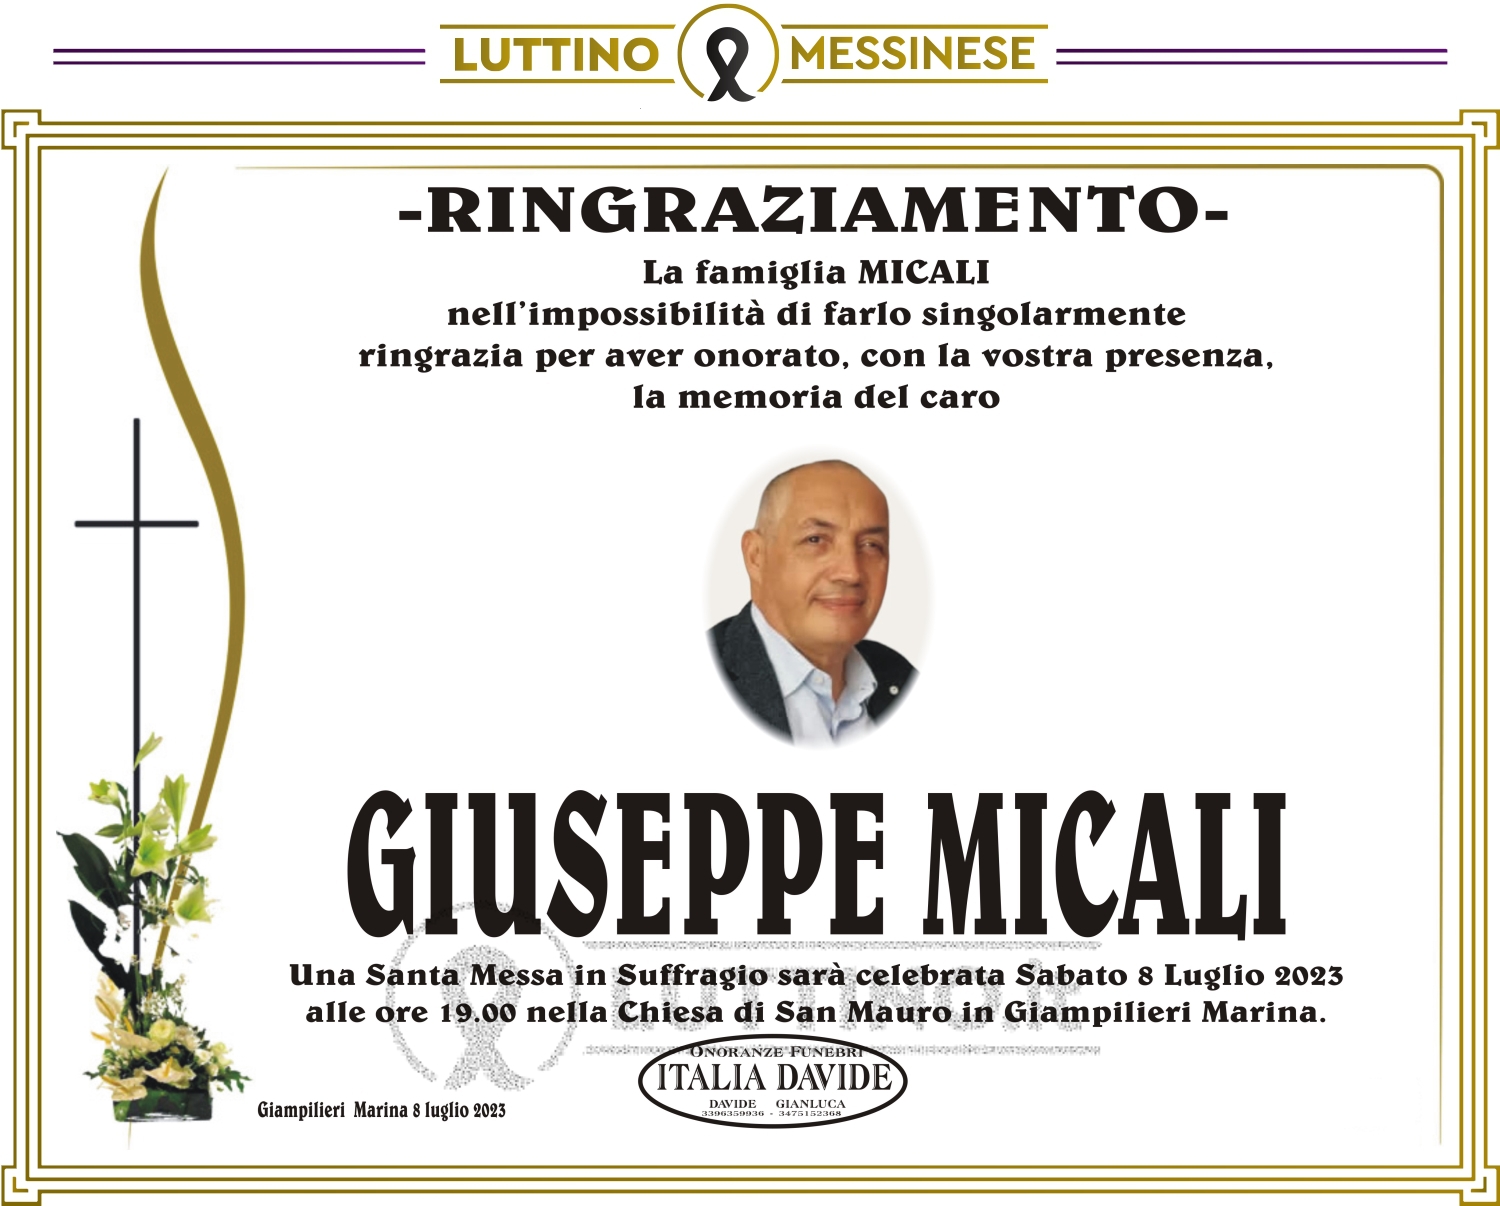 Giuseppe Micali